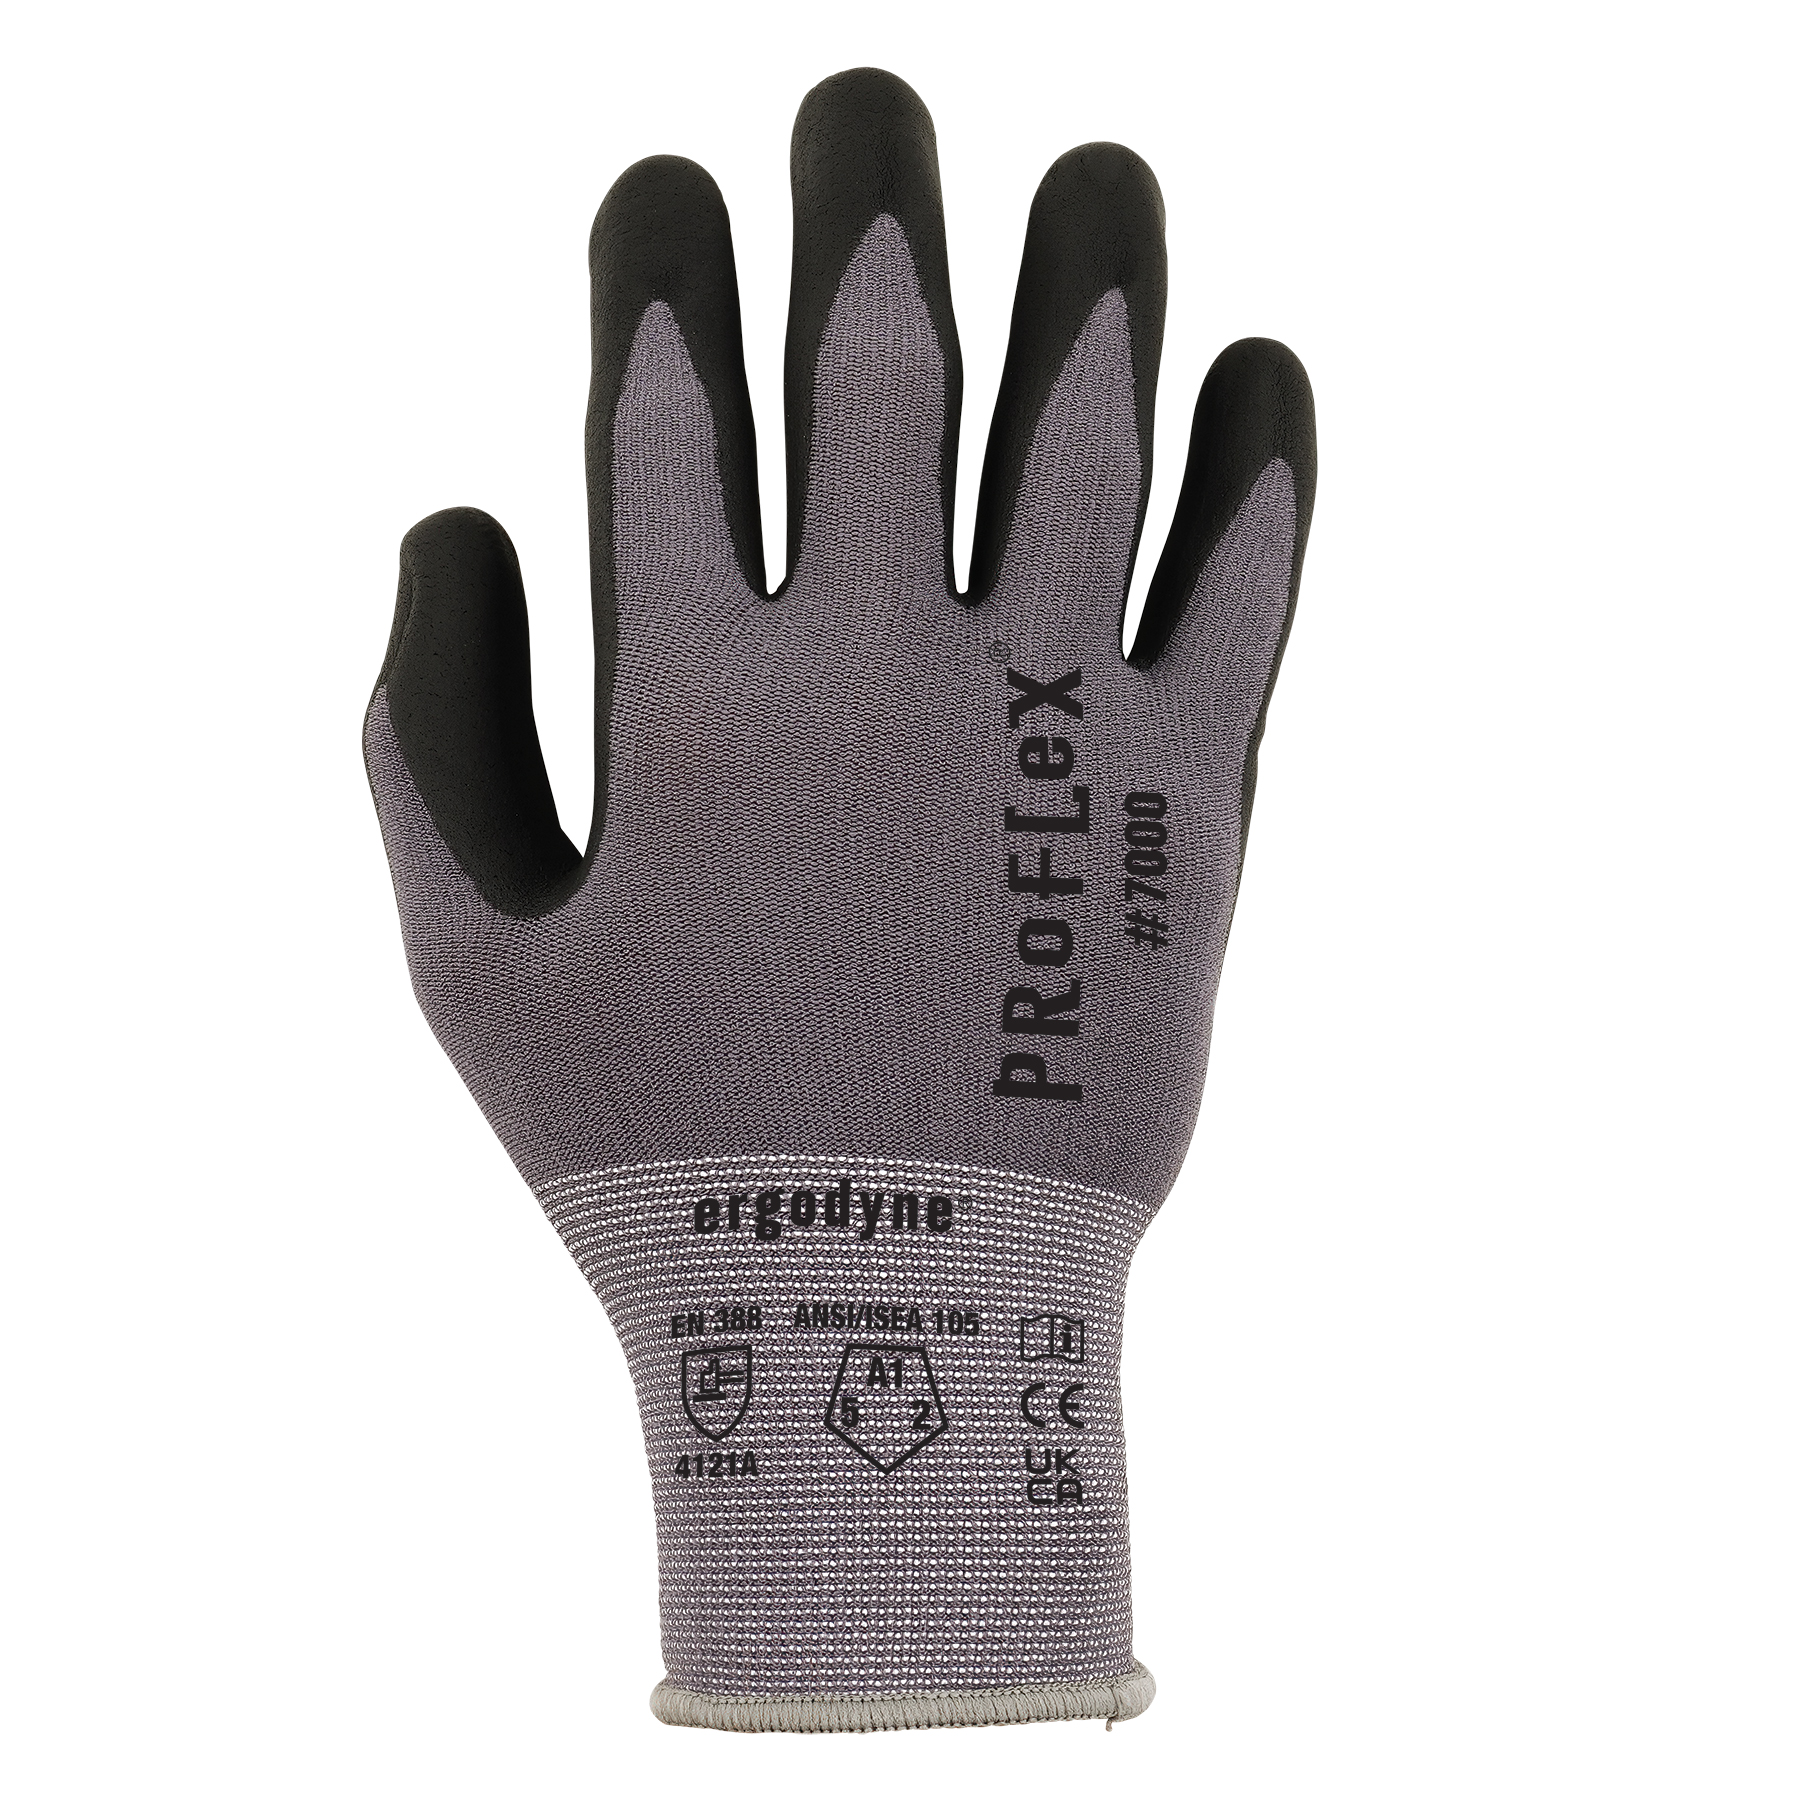 https://www.ergodyne.com/sites/default/files/product-images/10371-7000-nitrile-coated-gloves-microfoam-palm-grey-dorsal_0.jpg